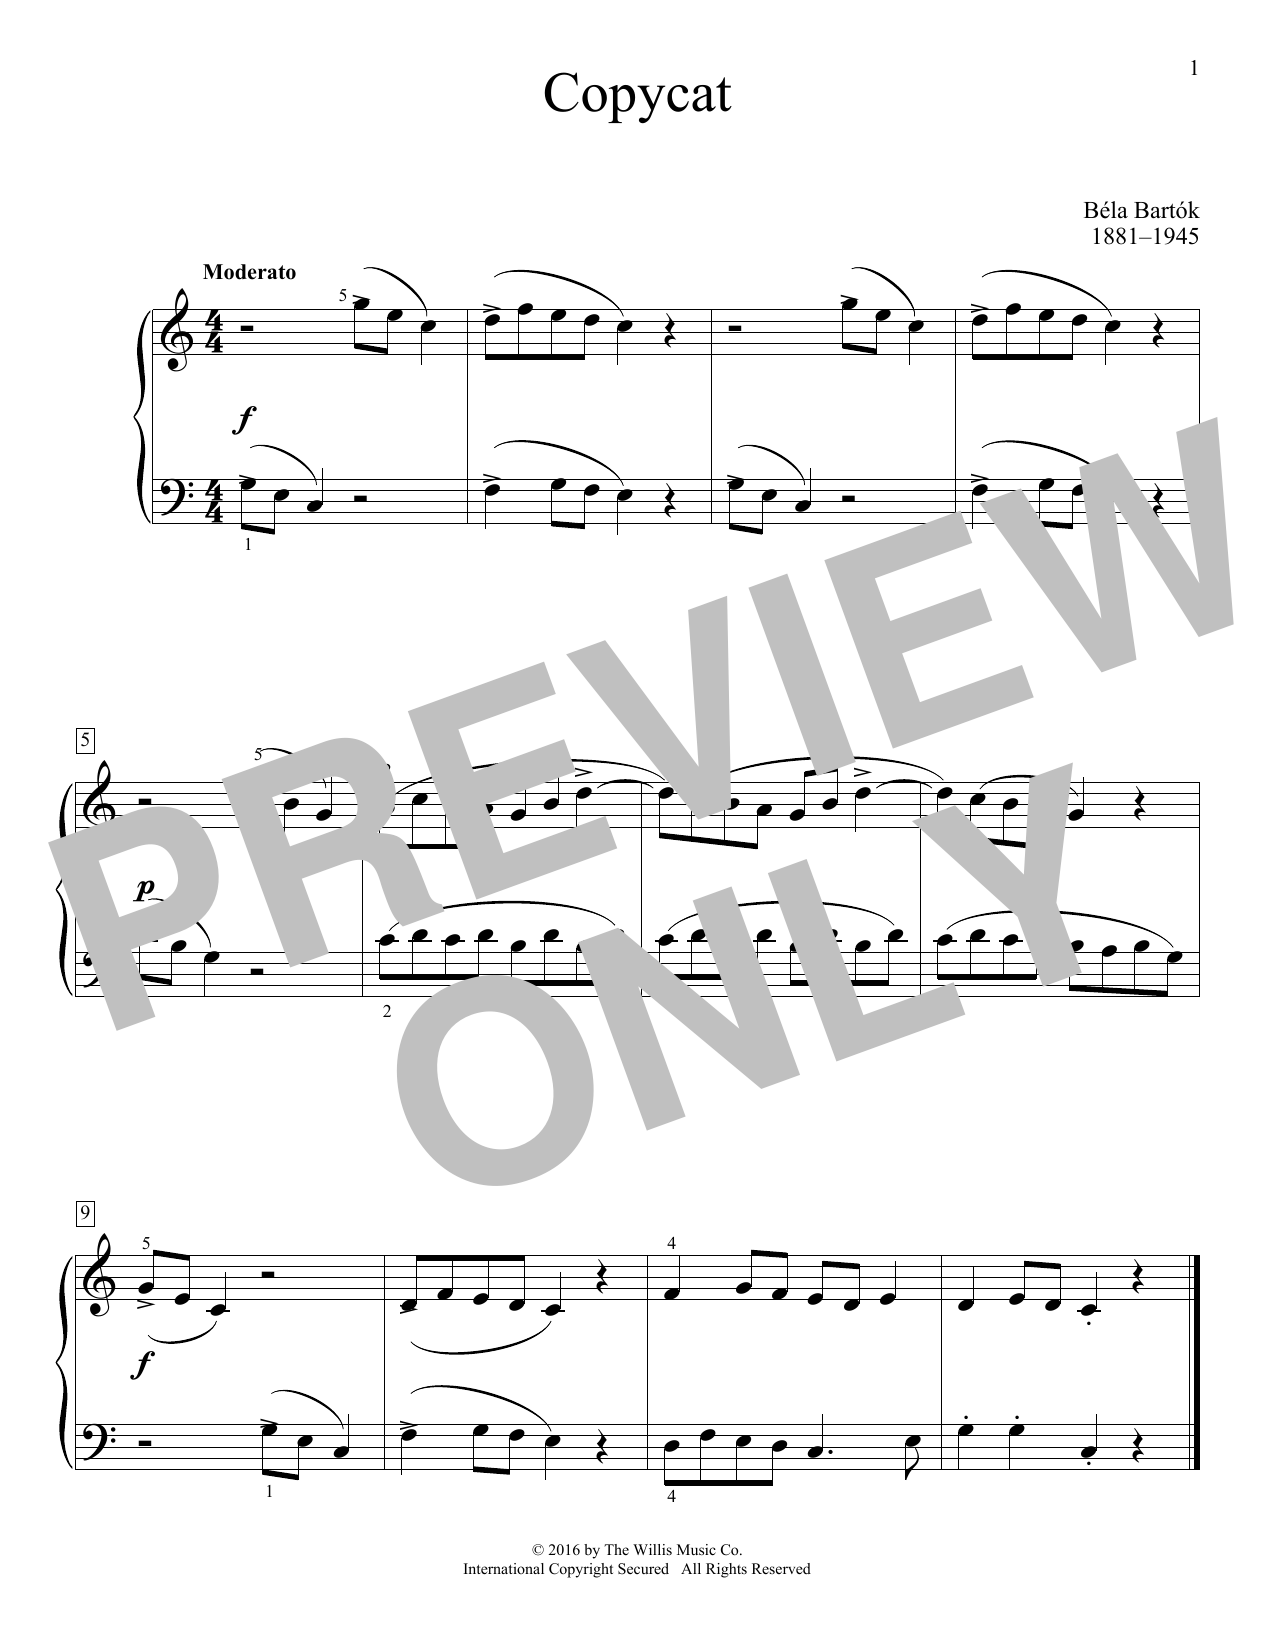 Download Bela Bartok Copycat Sheet Music